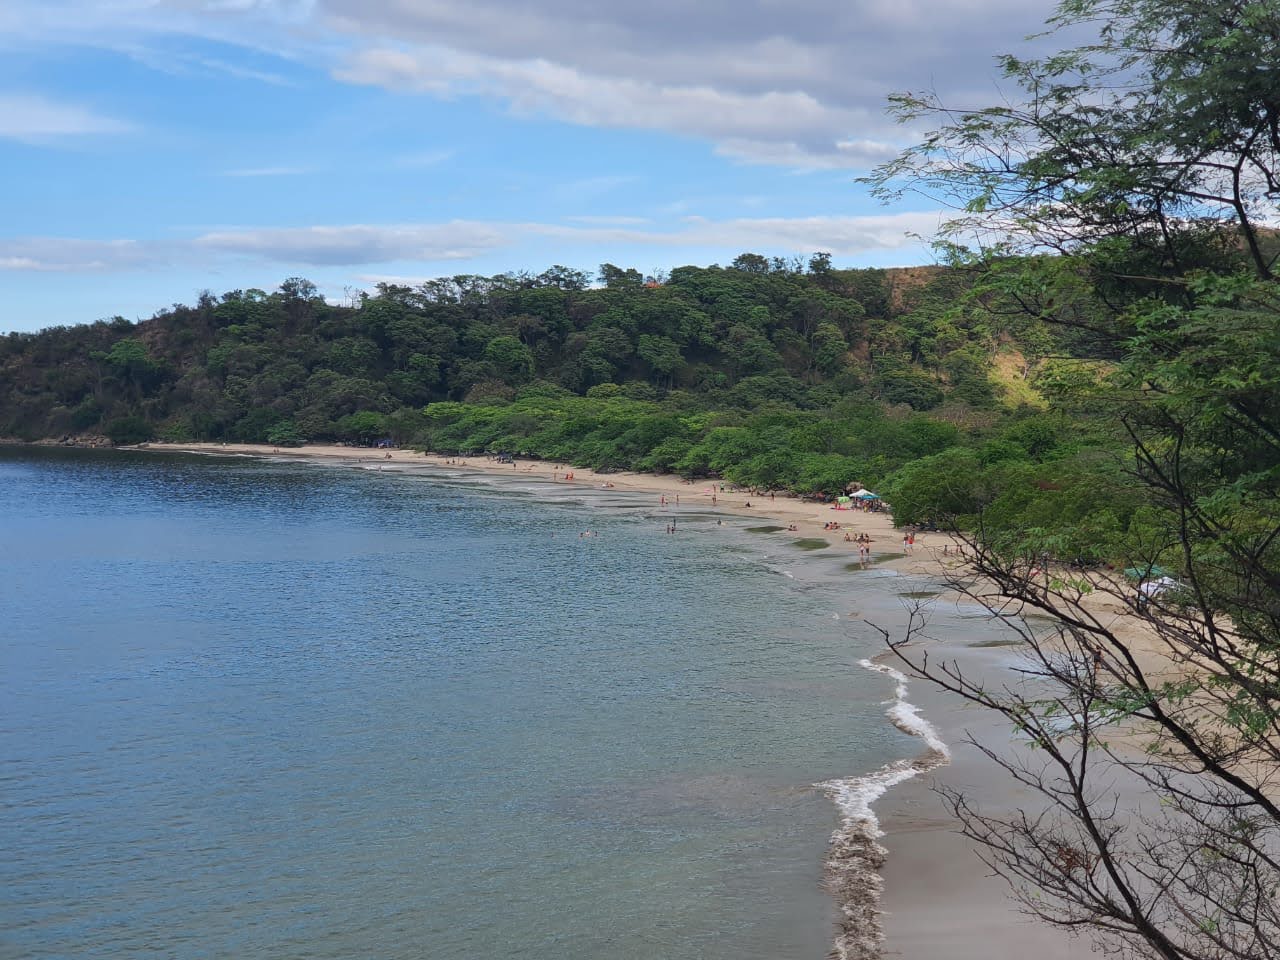 Fotografija Rajada beach II nahaja se v naravnem okolju